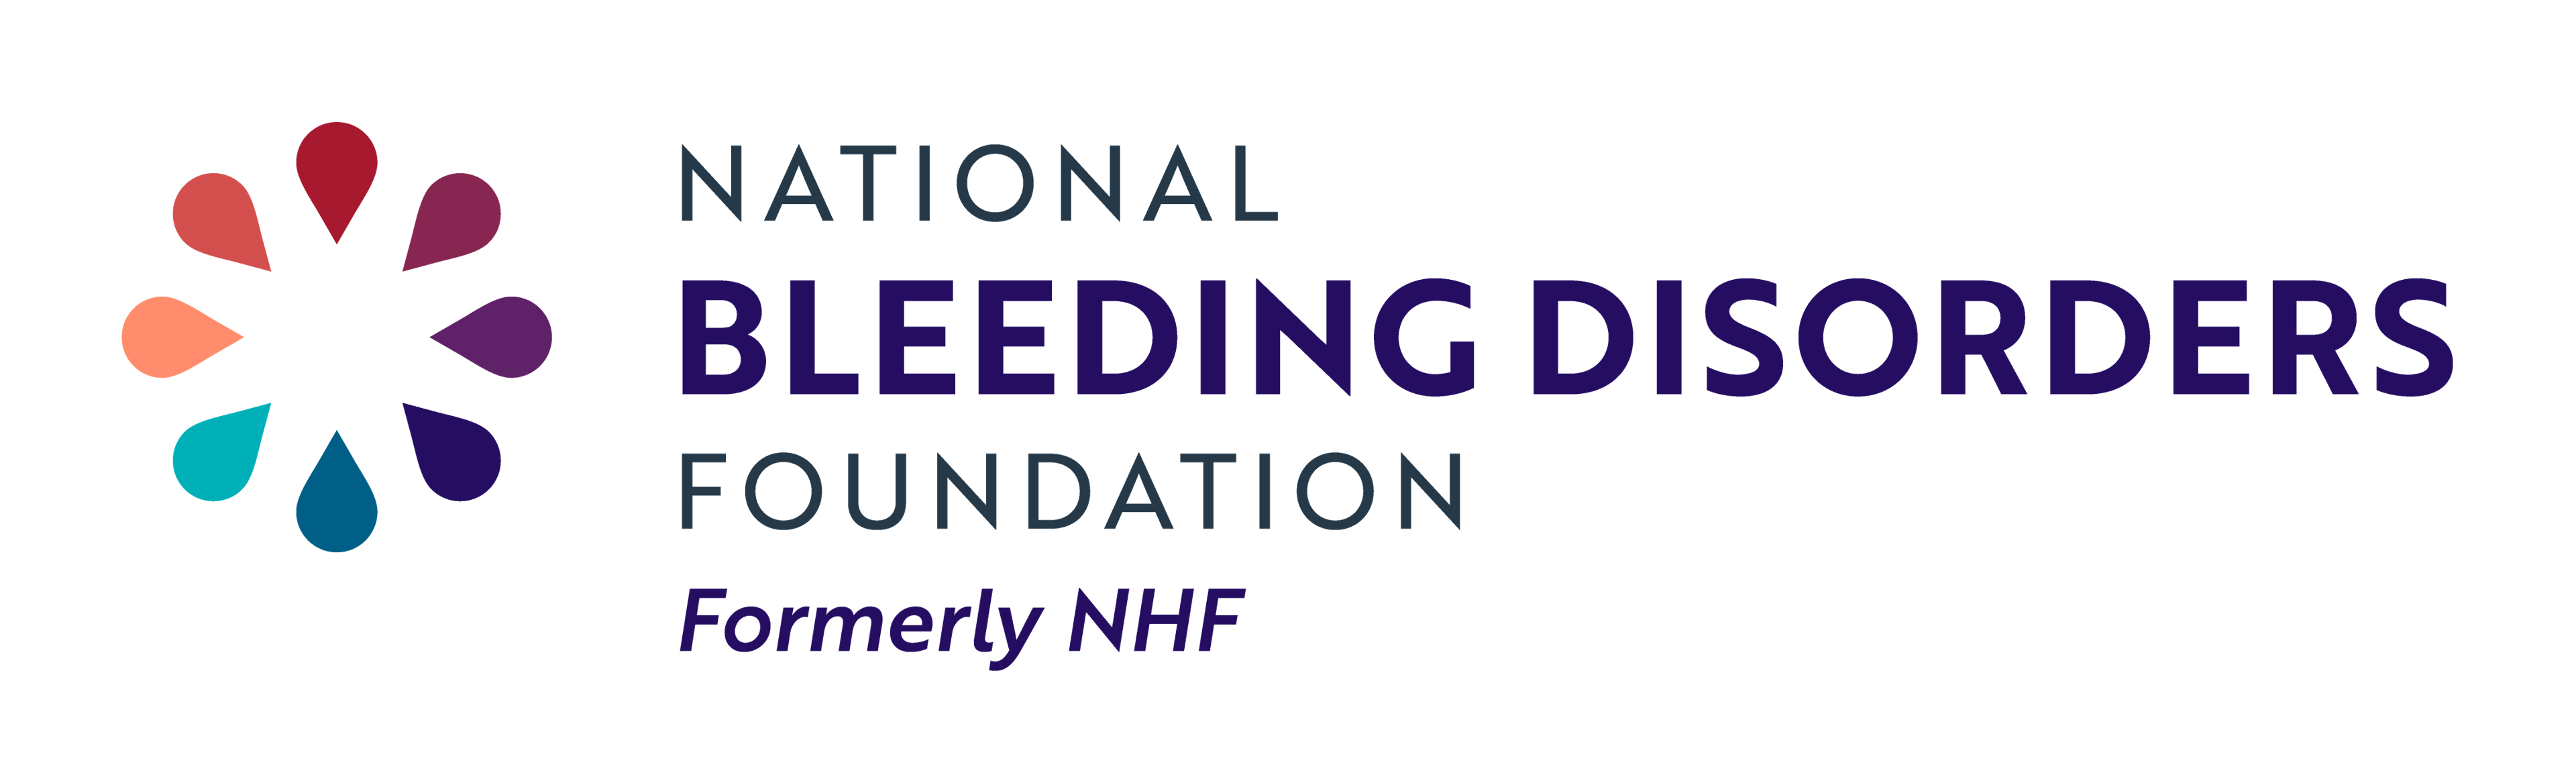 National Hemophilia Foundation Updates Name to National Bleeding Disorders Foundation